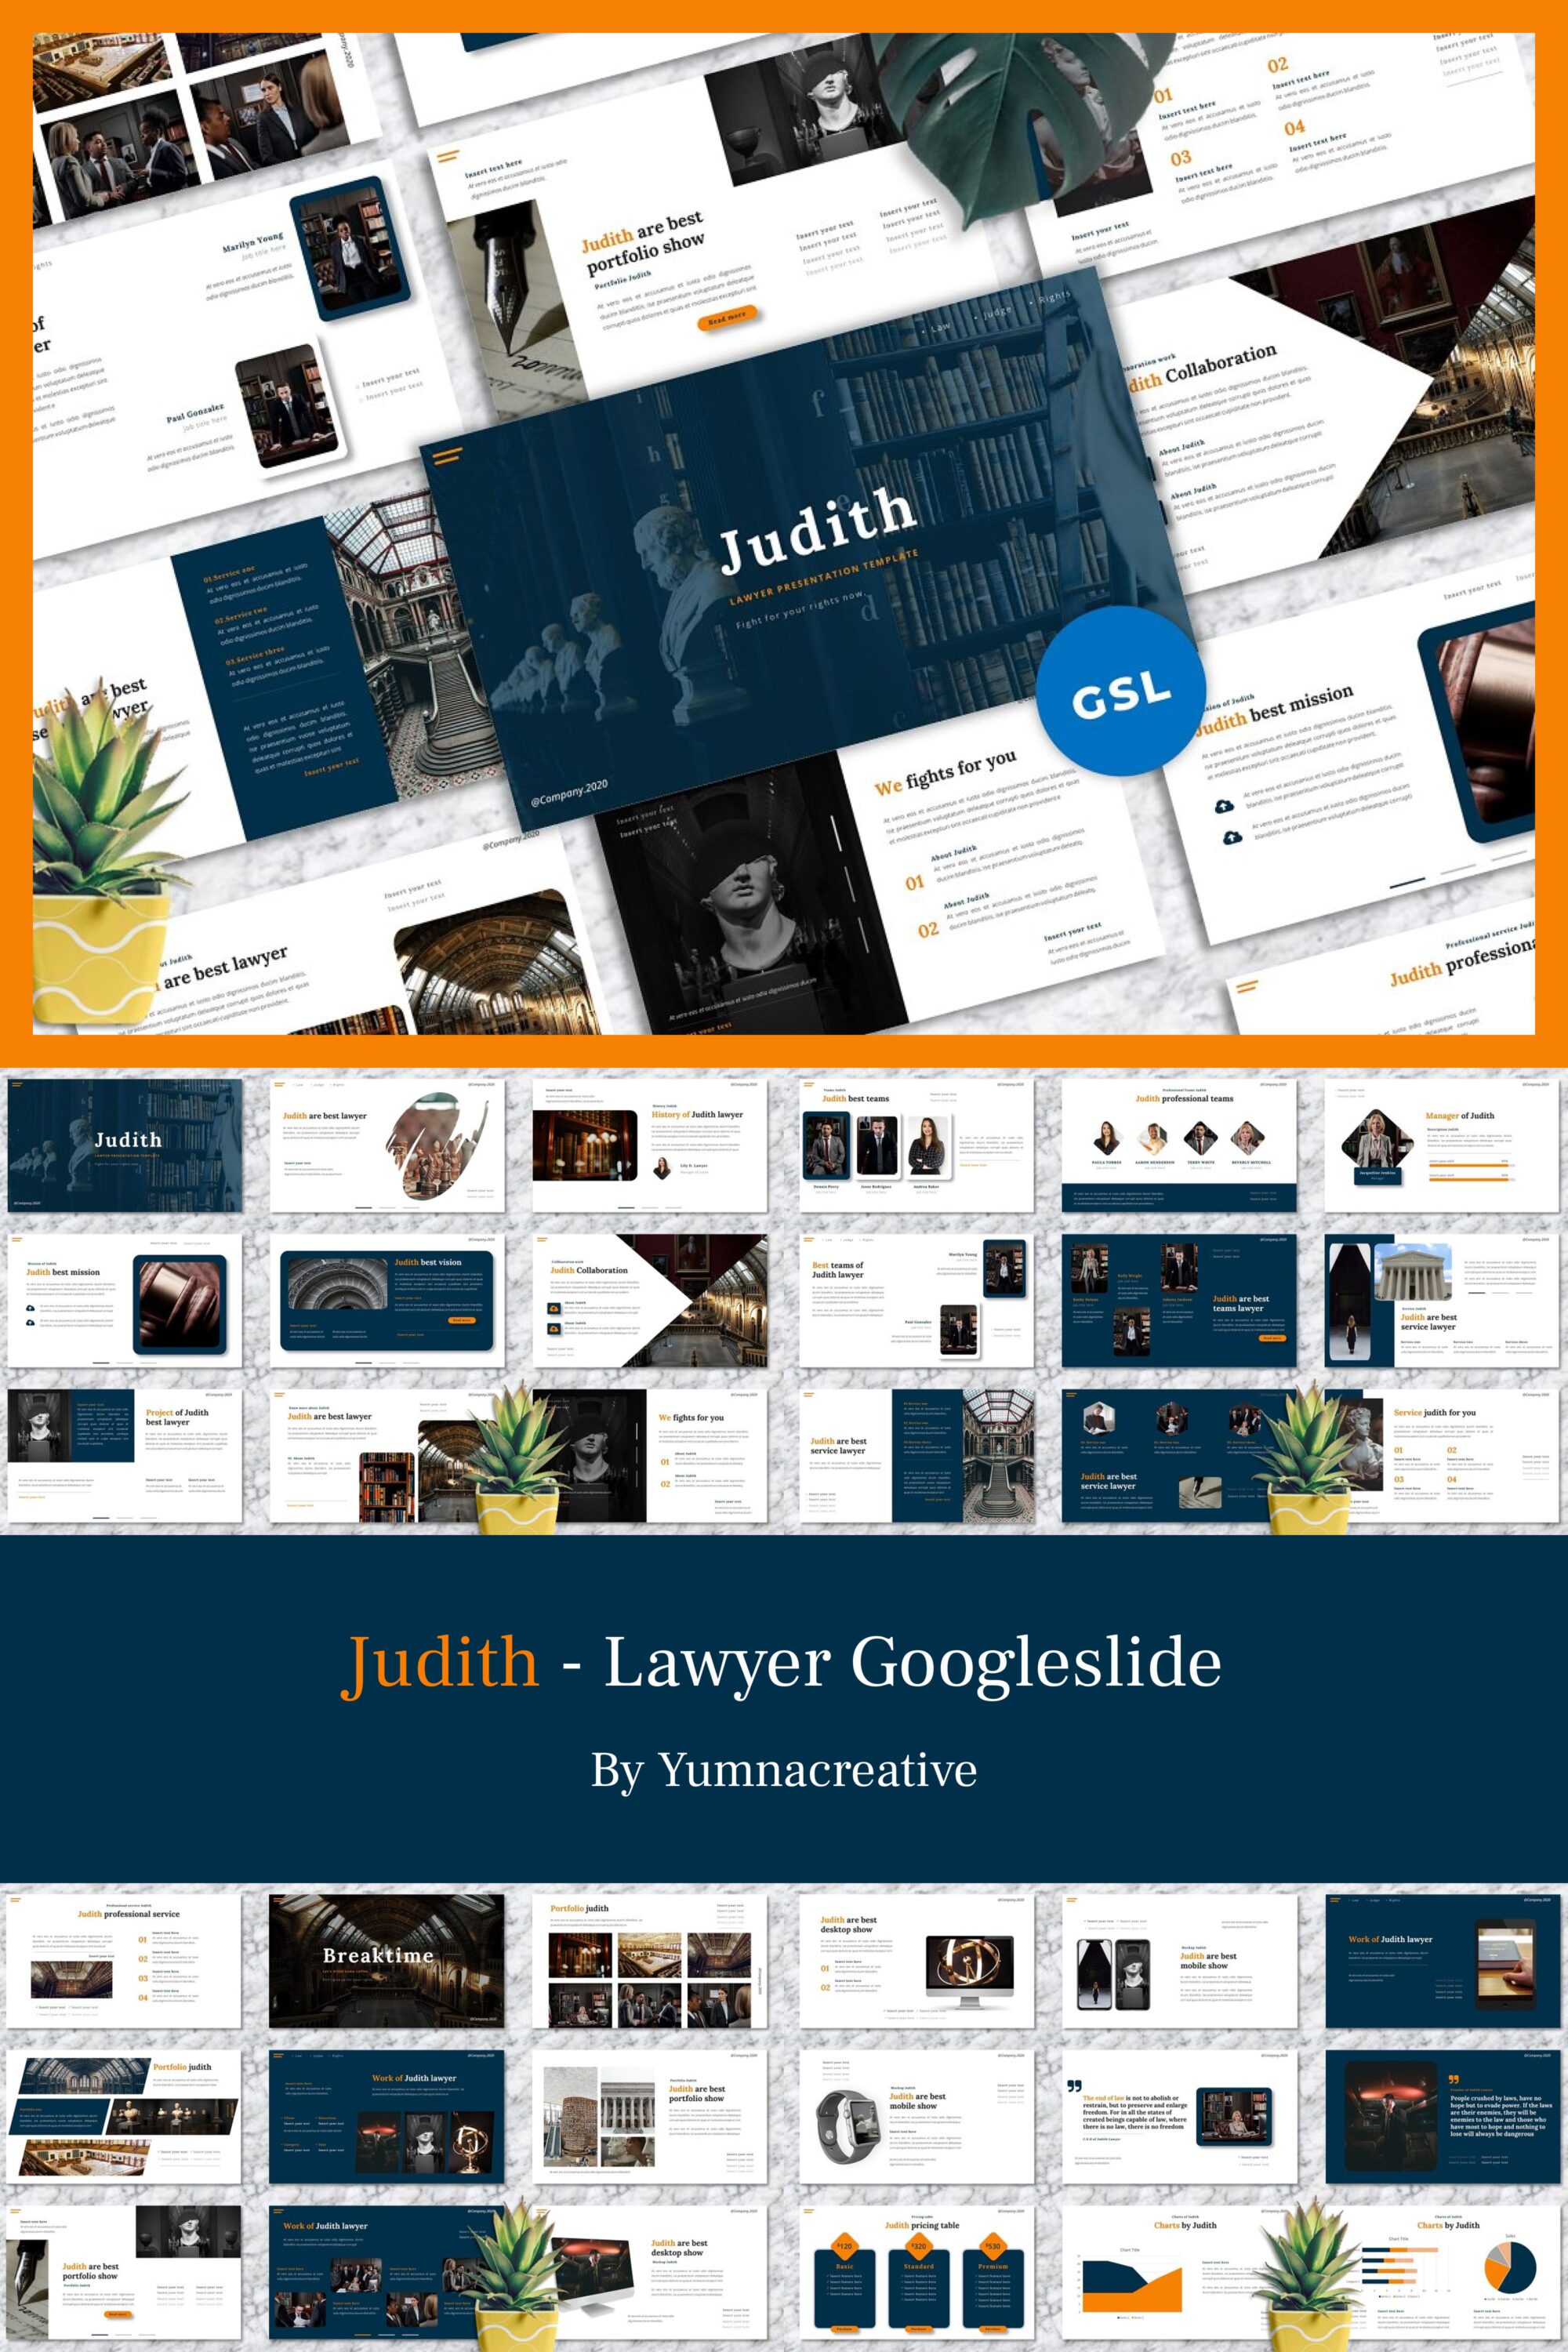 Judith Lawyer Google Slide - pinterest image preview.